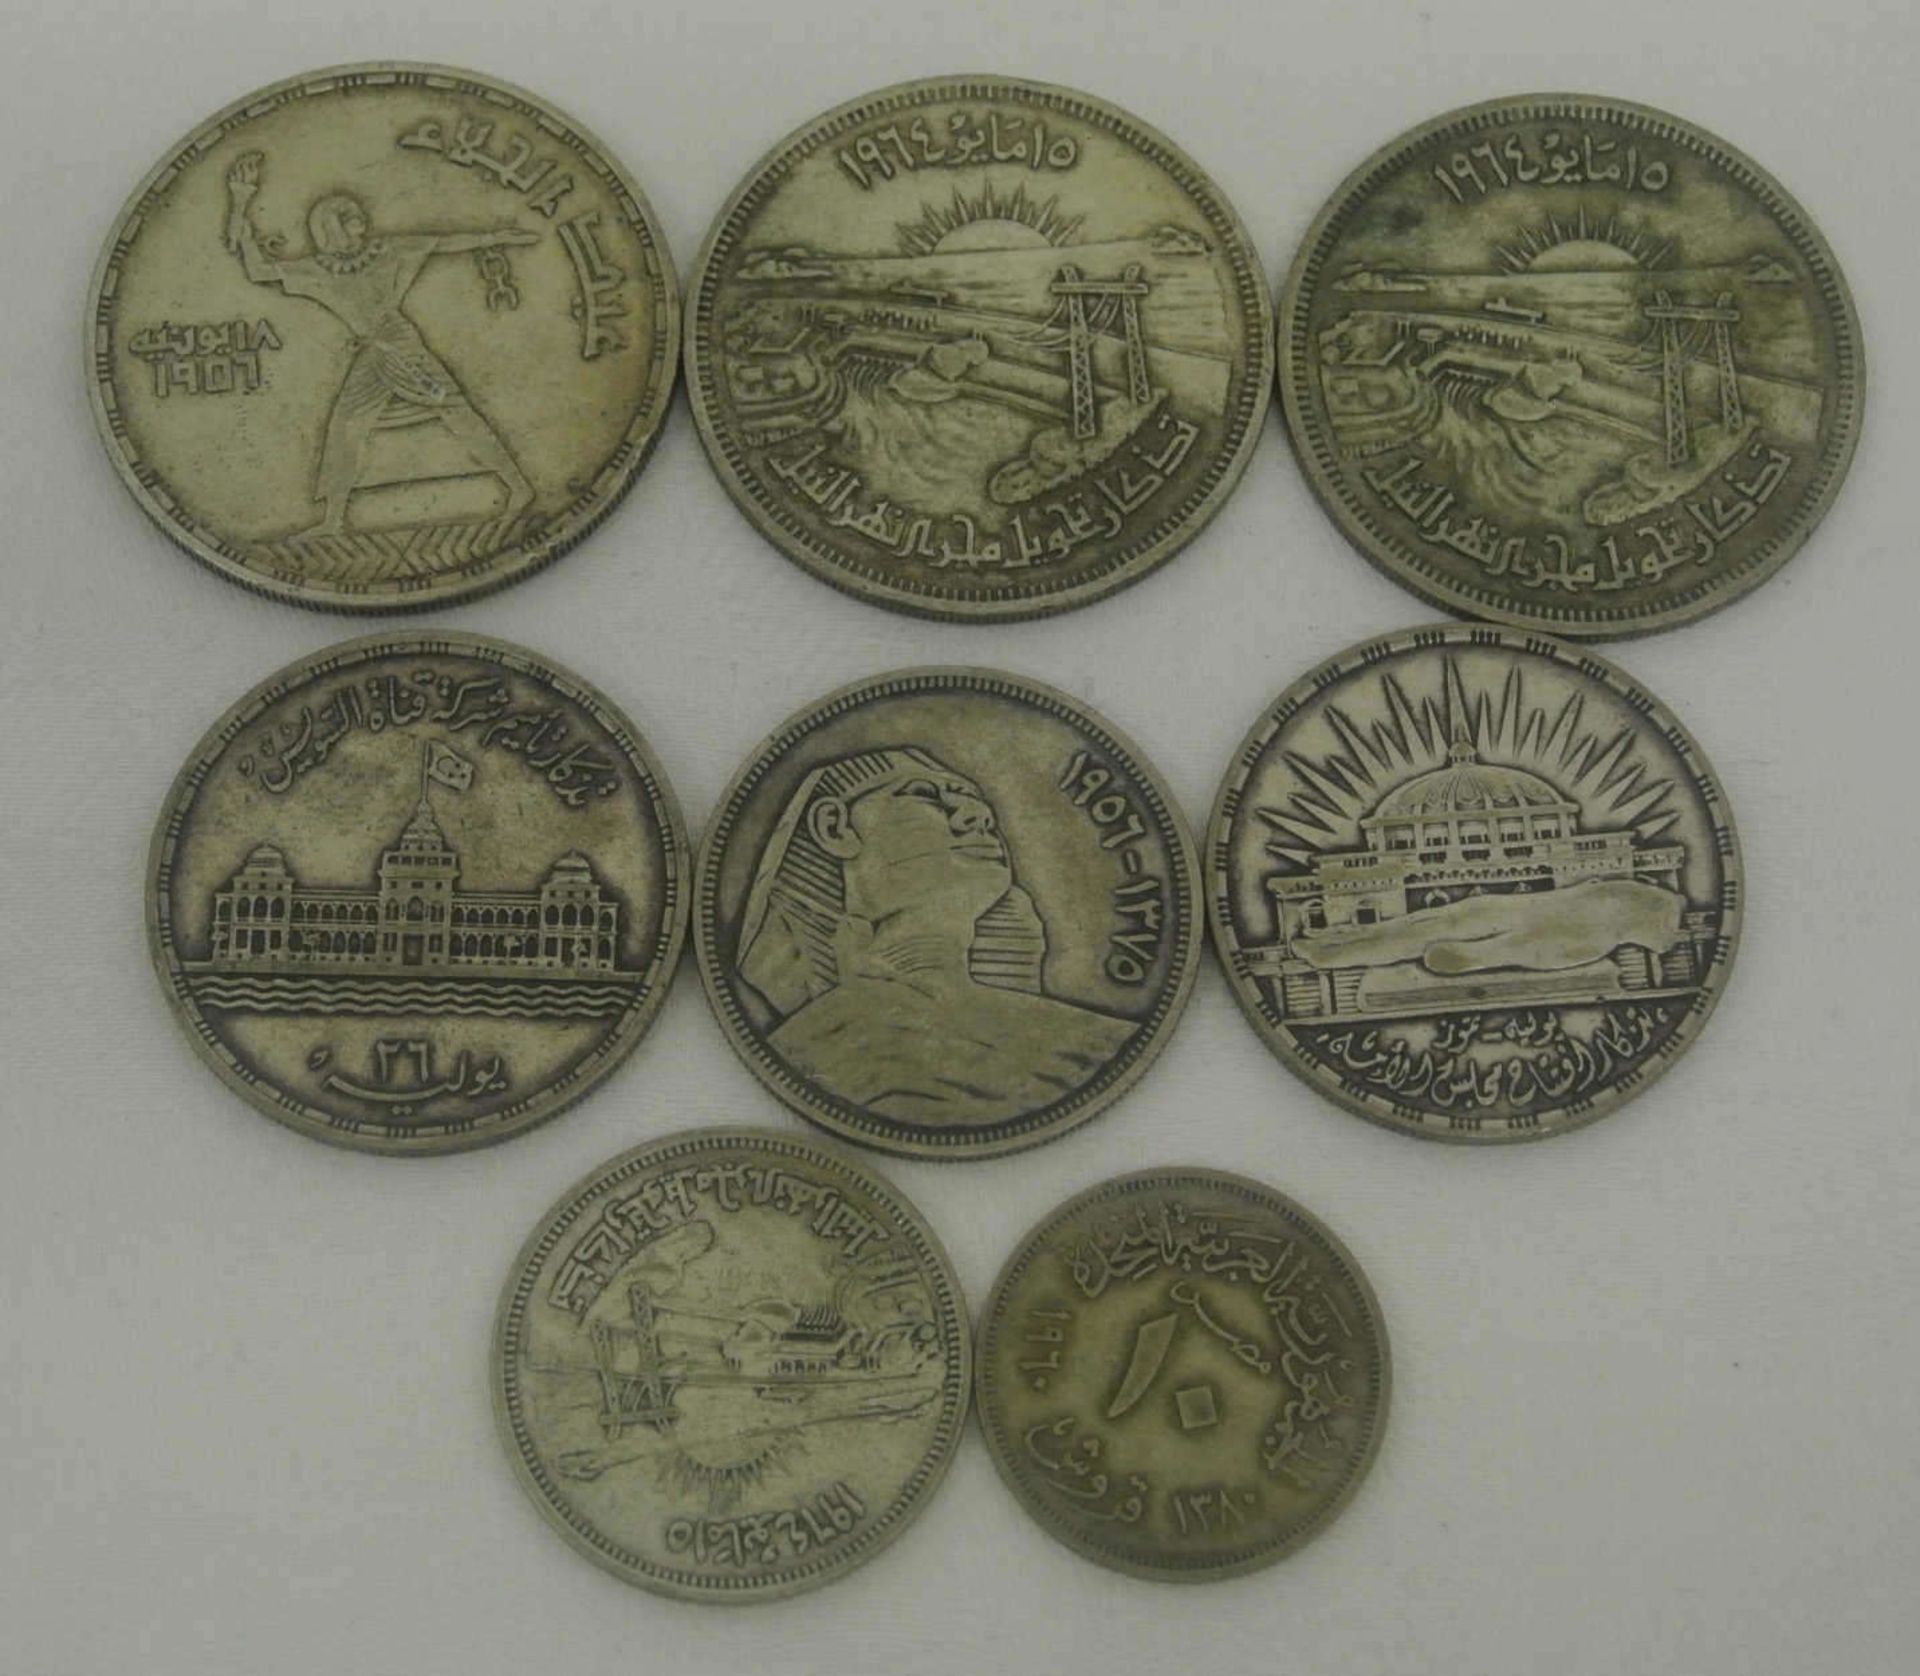 Lot Silbermünzen Ägypten, insgesamt 8 Stück. Hoher Katalogpreis. Besichtigung empfohlen.